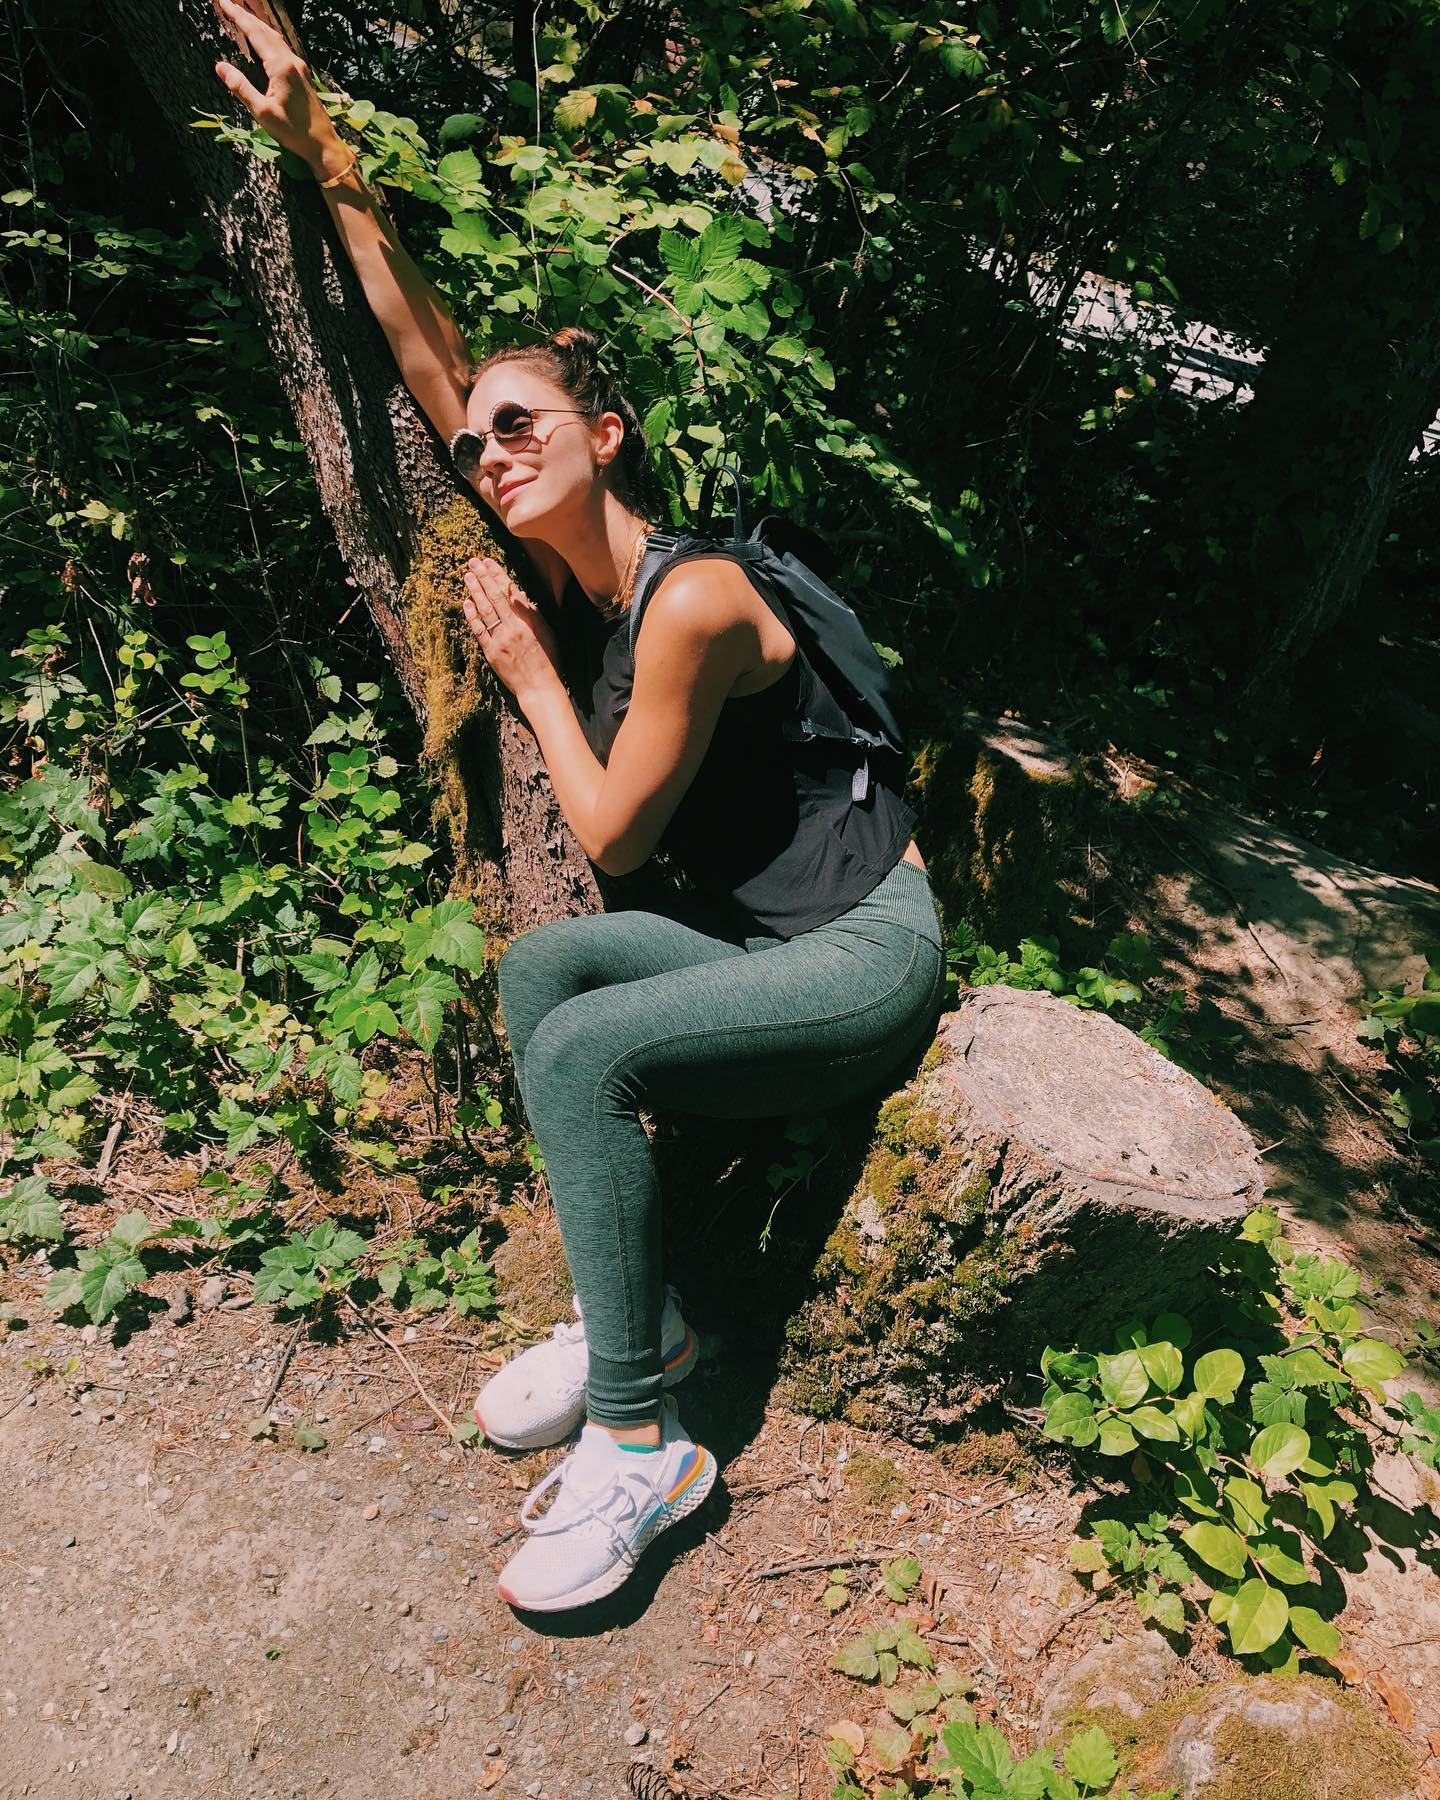 Photos n°2 : Katharine McPhee Foster On a Hike!